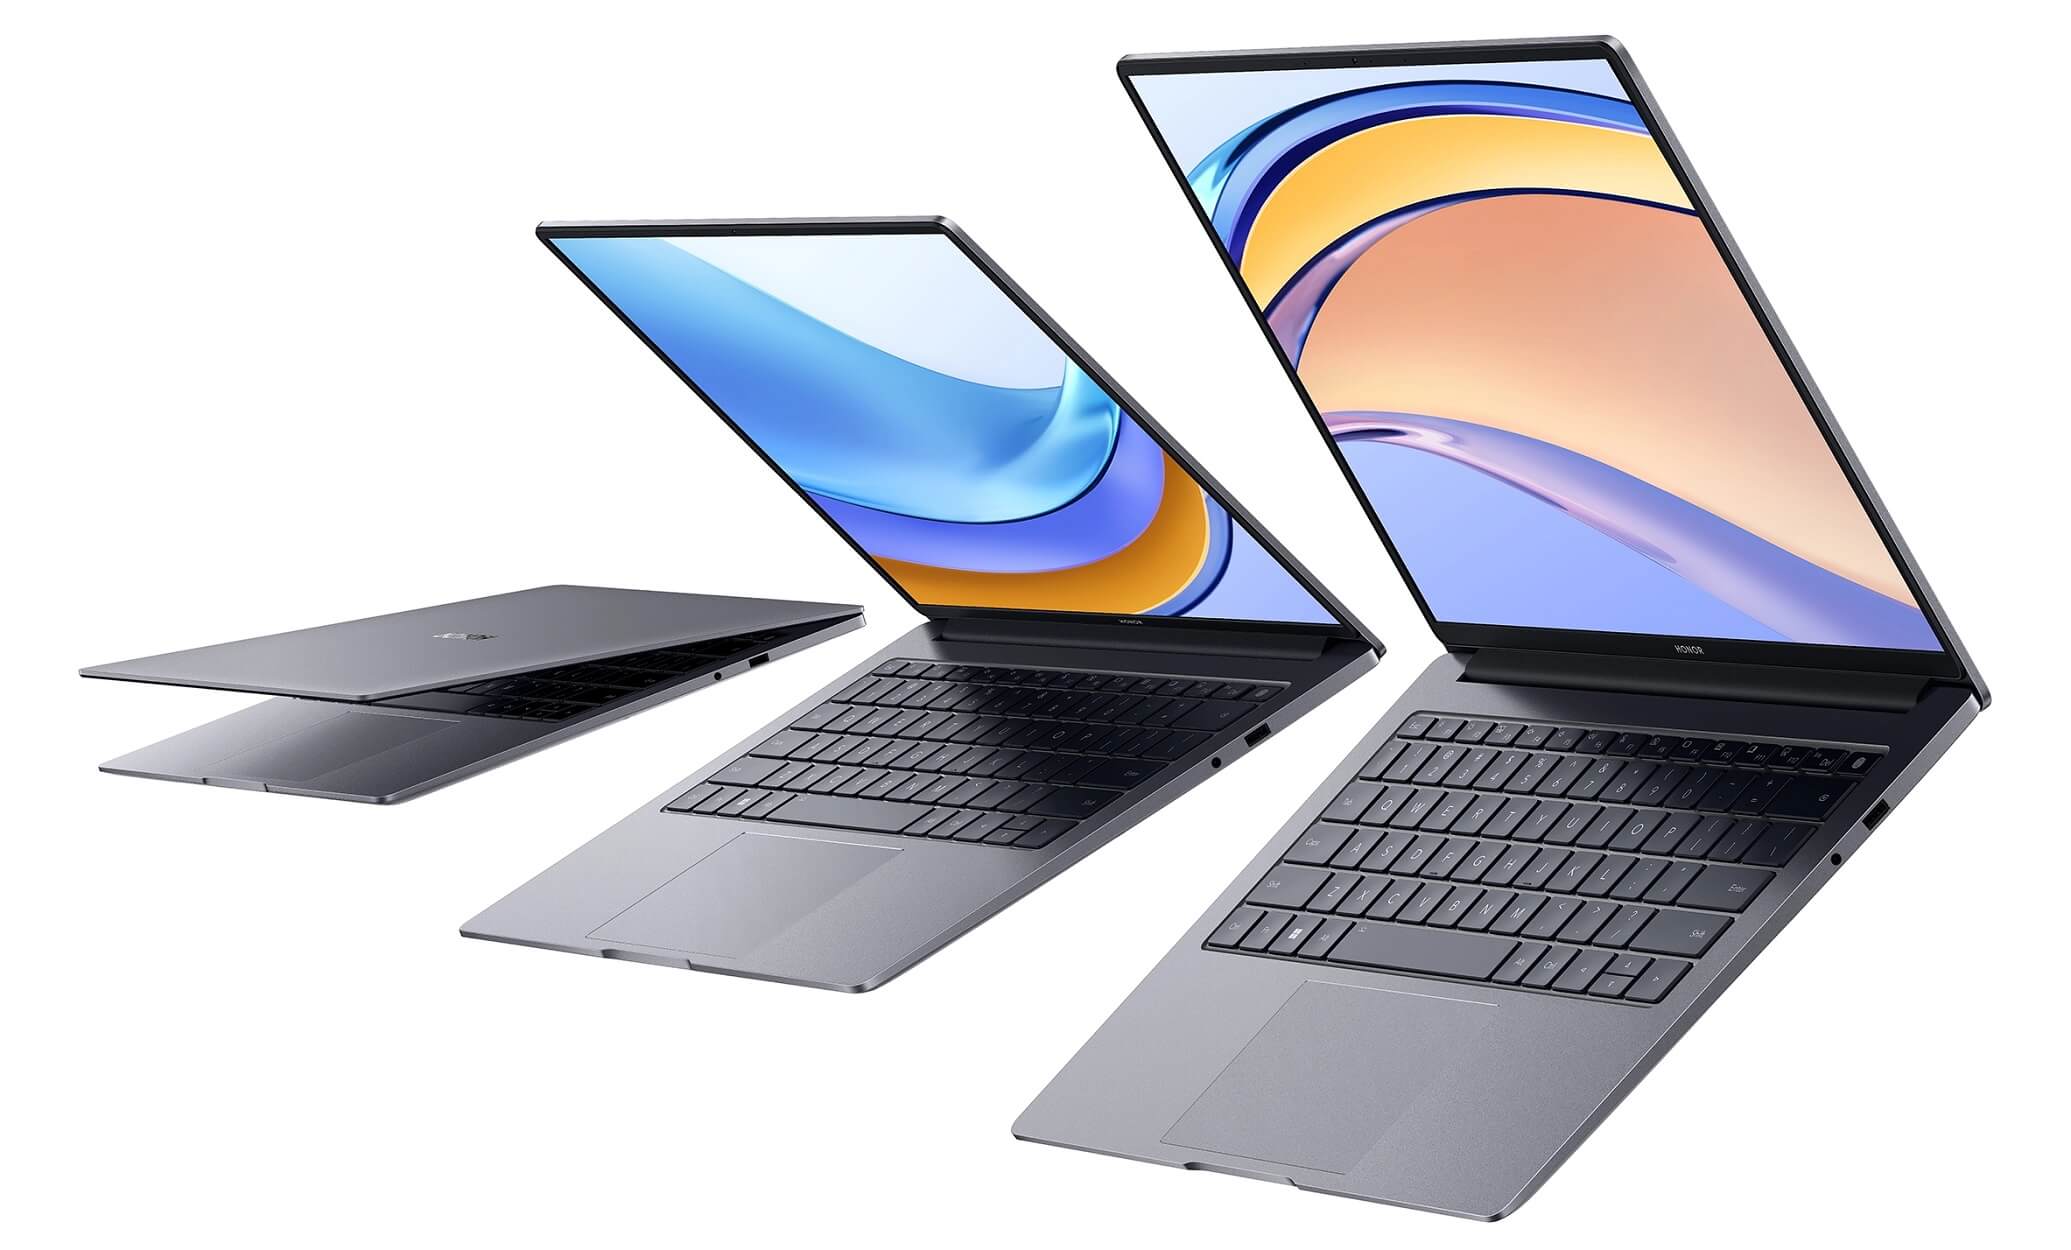 Honor MagicBook X14 and MagicBook X16 design India